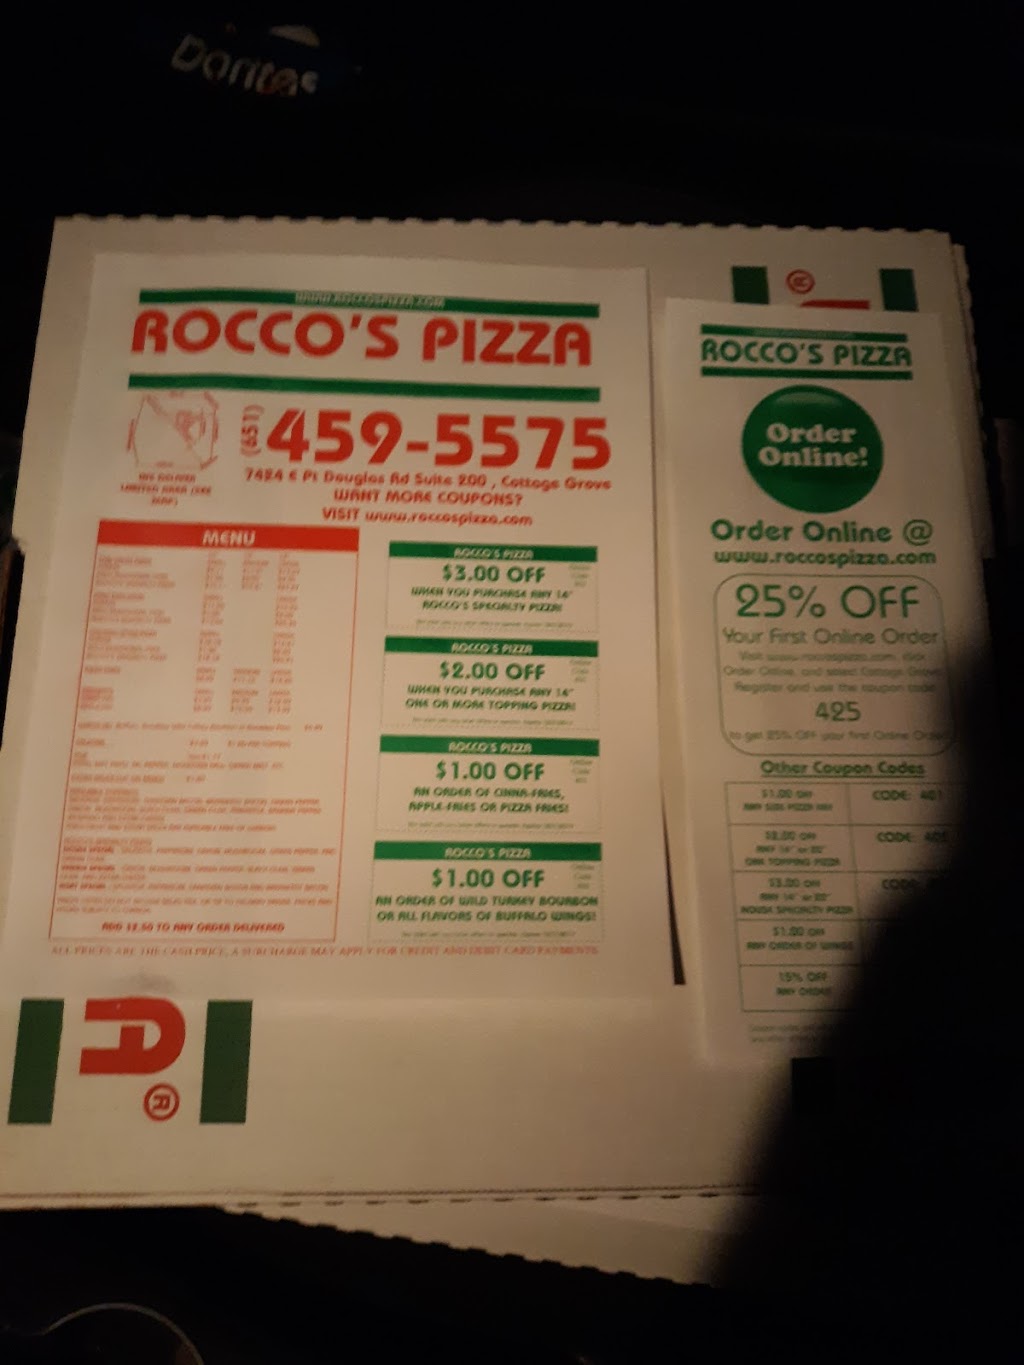 Roccos Pizza | 7422 E Point Douglas Rd S #3025, Cottage Grove, MN 55016 | Phone: (651) 459-5575